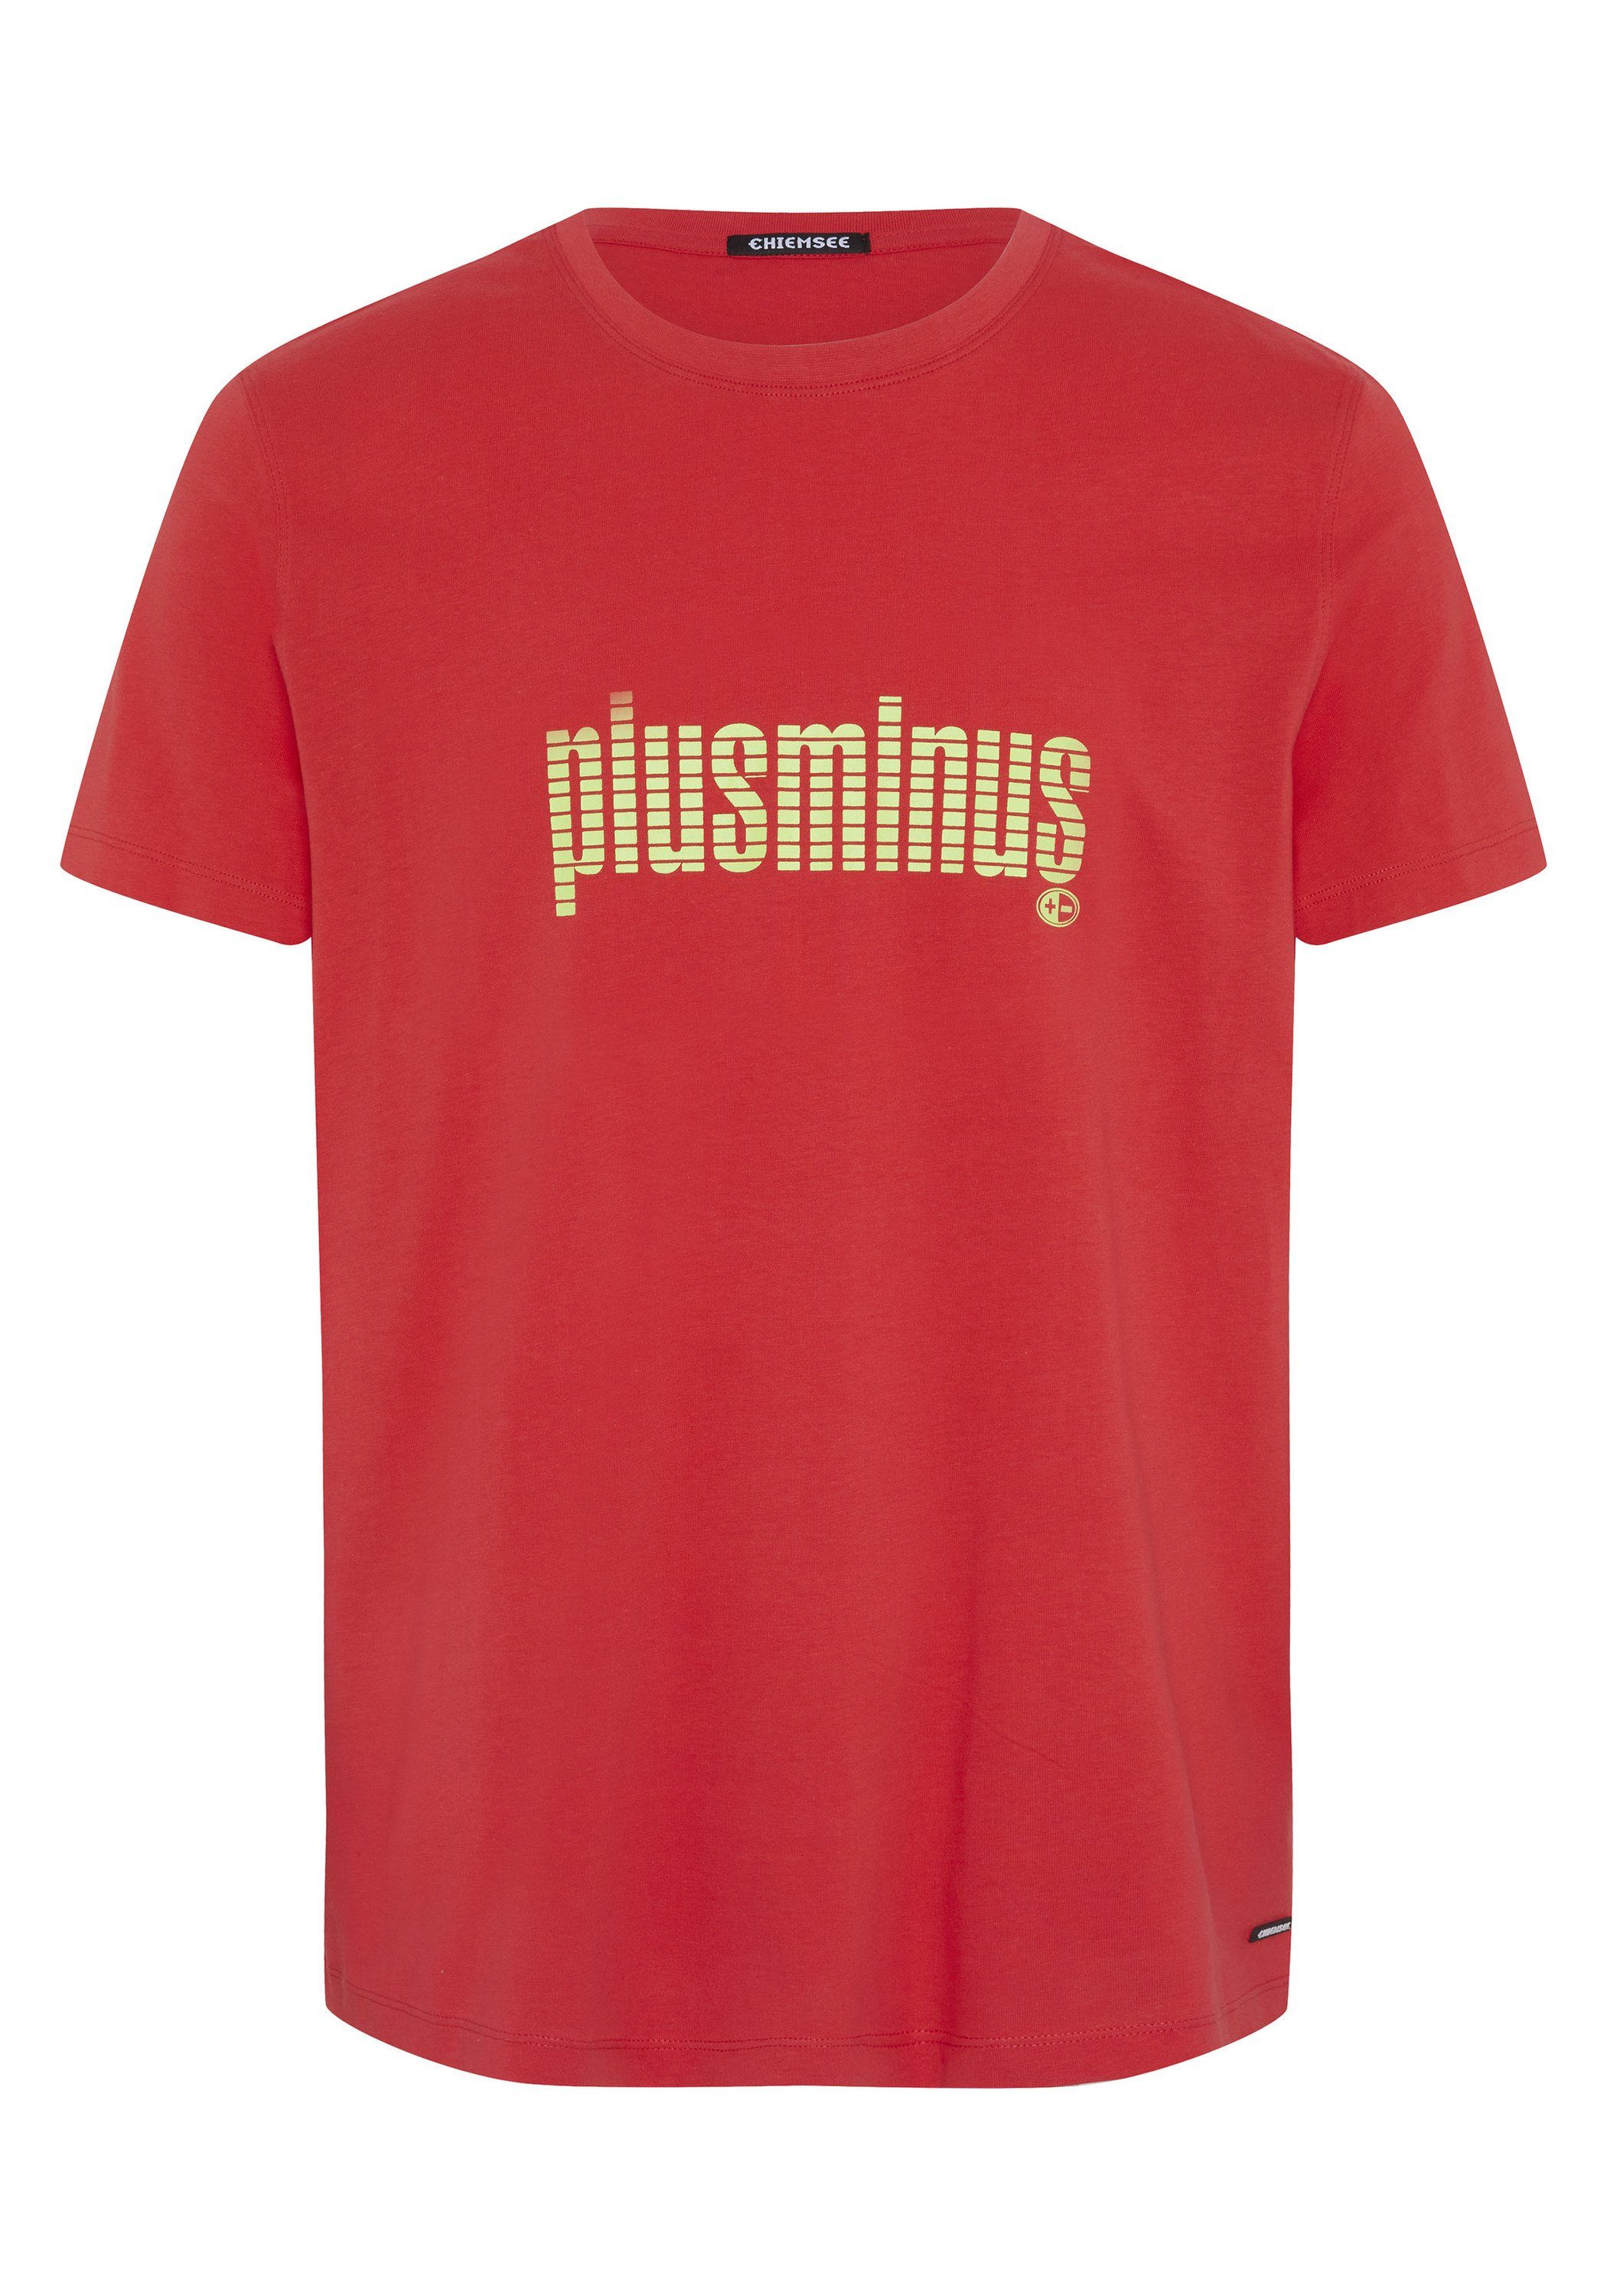 Chiemsee Print-Shirt T-Shirt im plusminus-Design 1 17-1663 Bittersweet